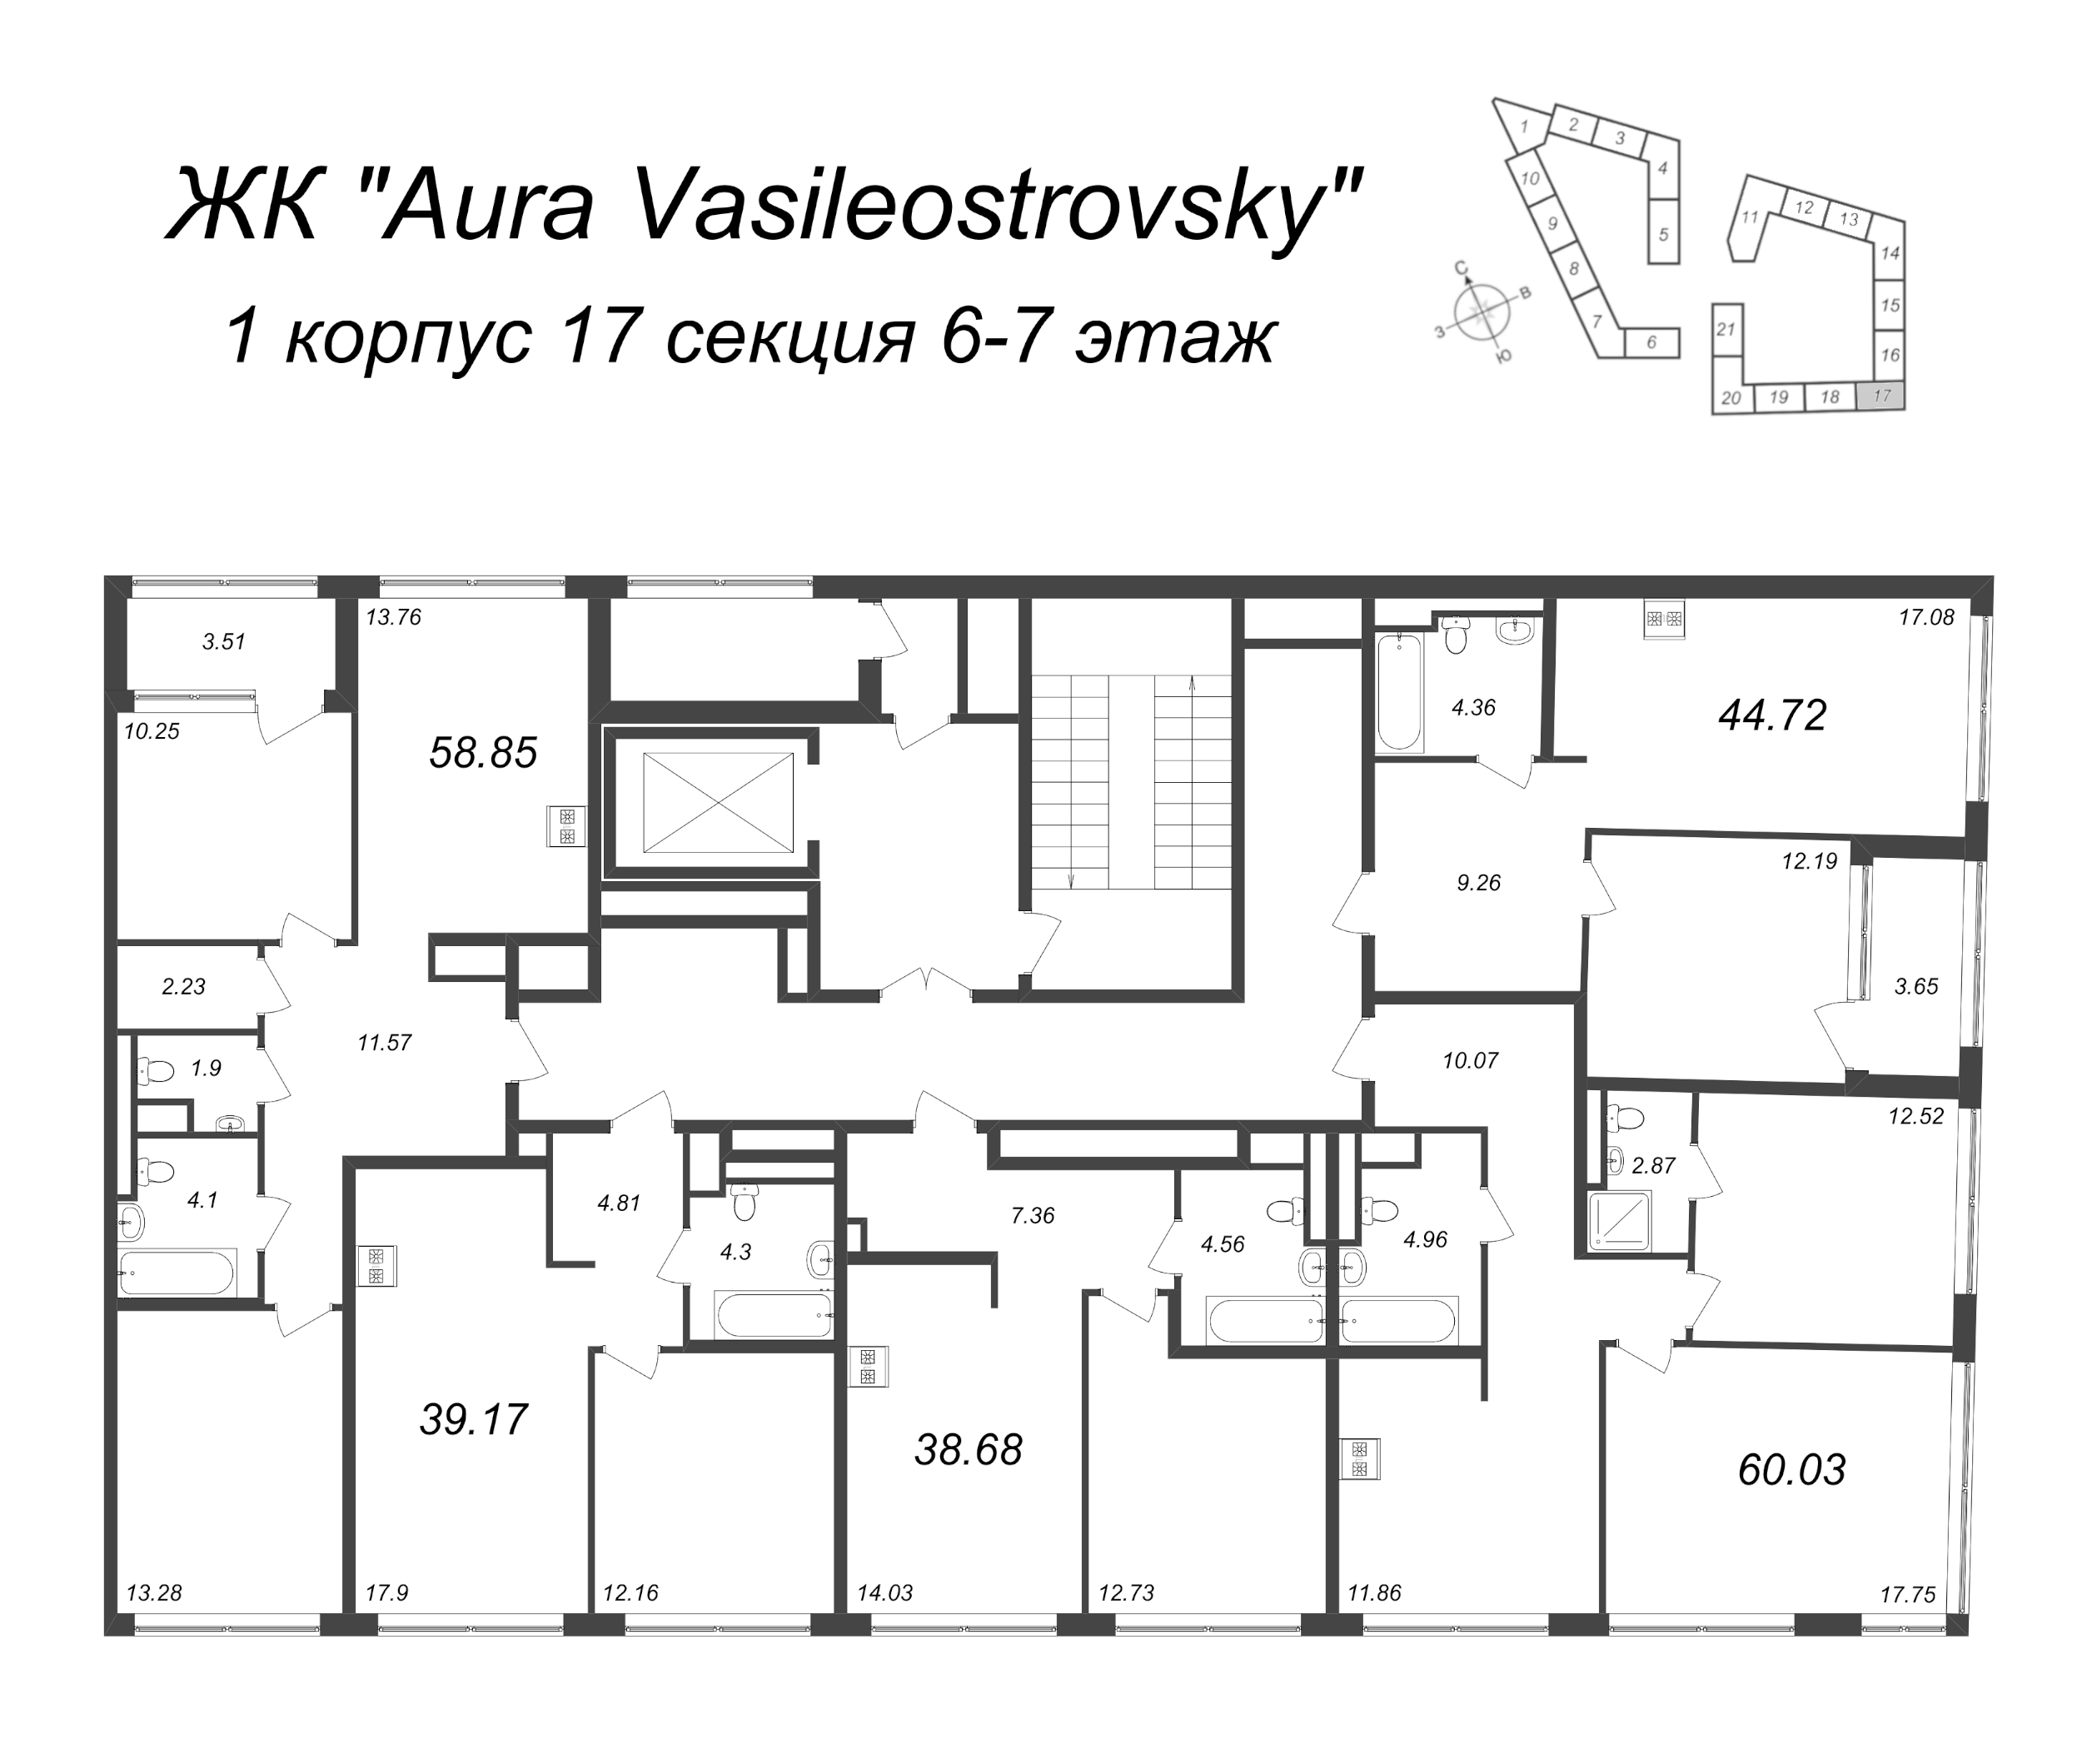 2-комнатная (Евро) квартира, 39.17 м² - планировка этажа